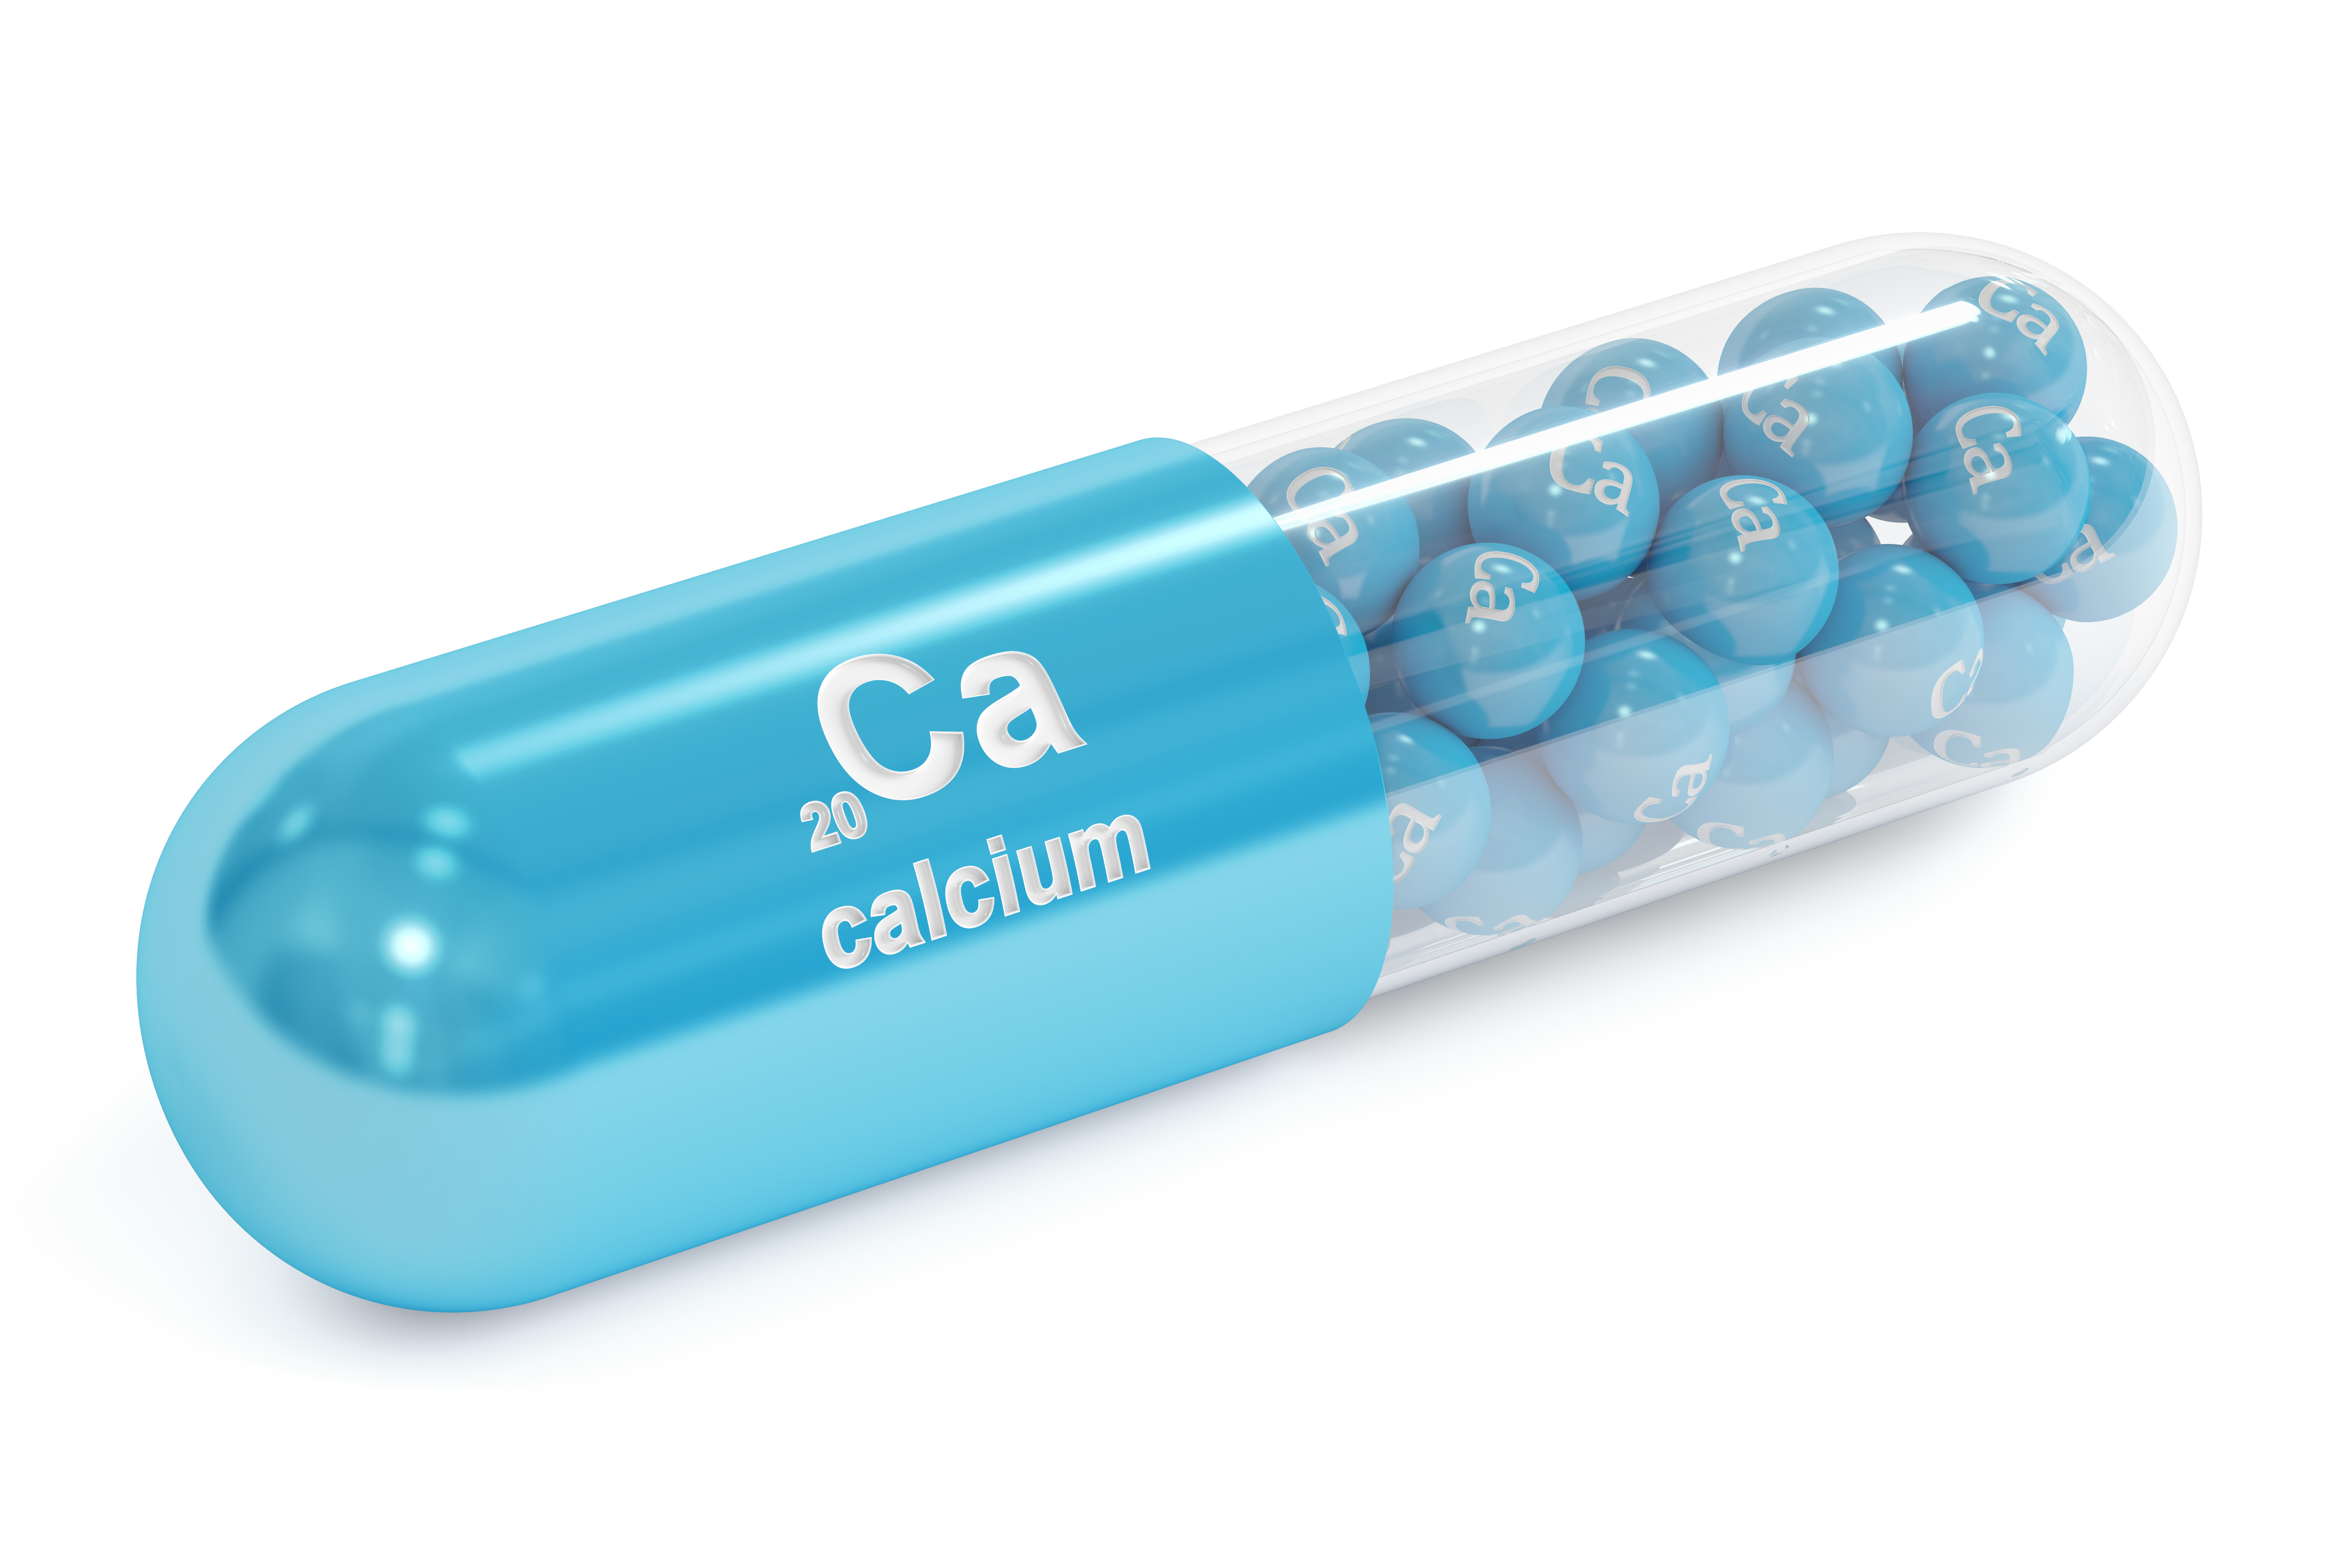 Do vegans need iodine supplements - Do vegans need calcium supplements? 